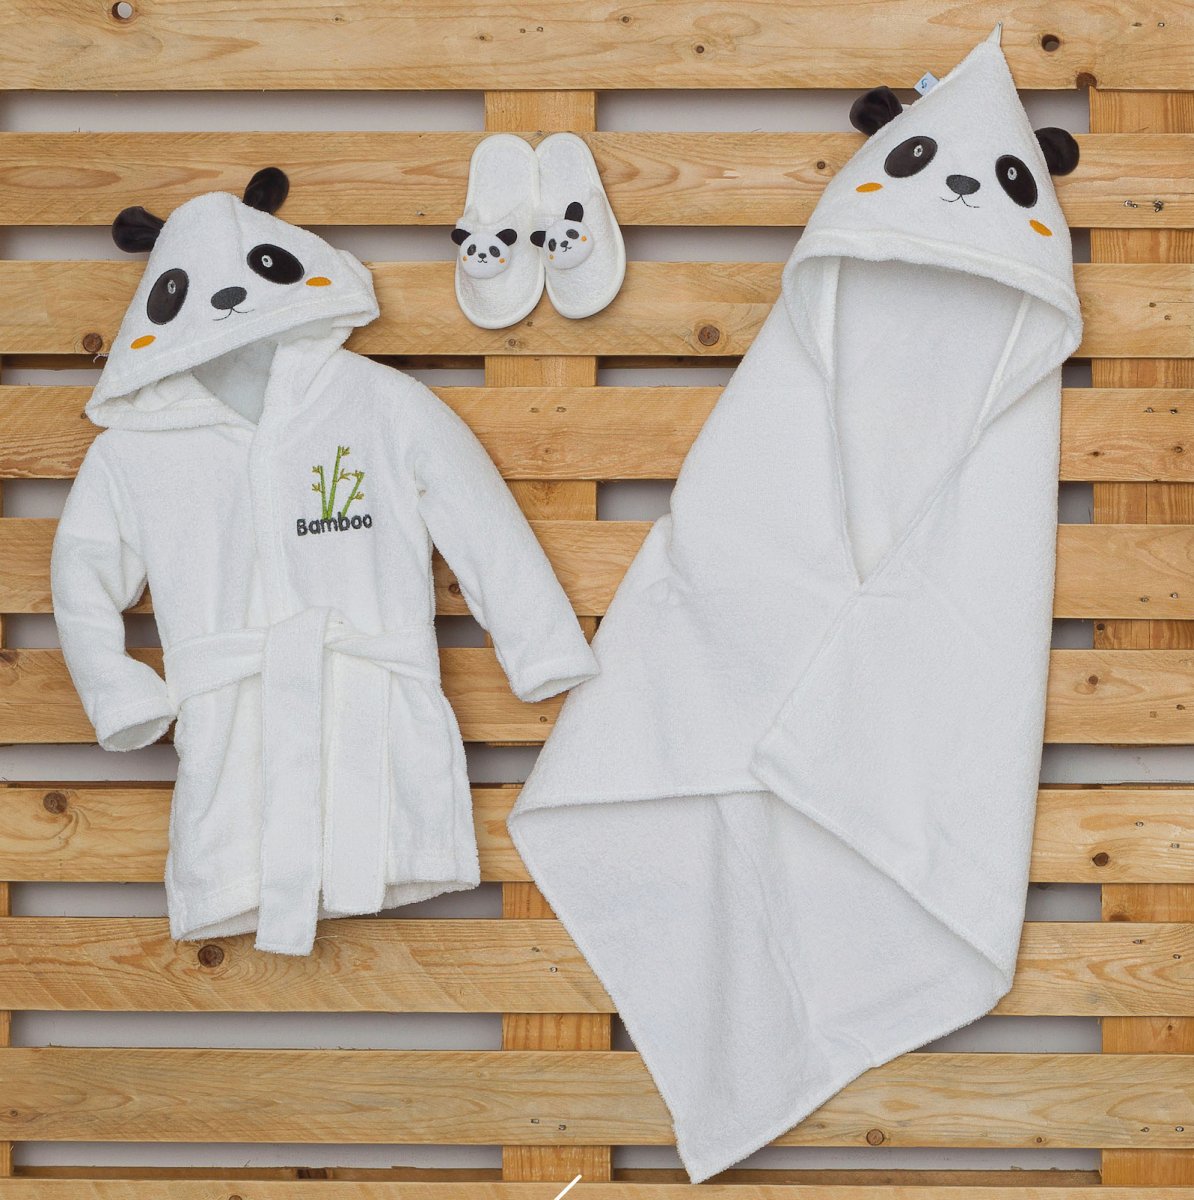 Asciugamano in microfibra Panda bambino